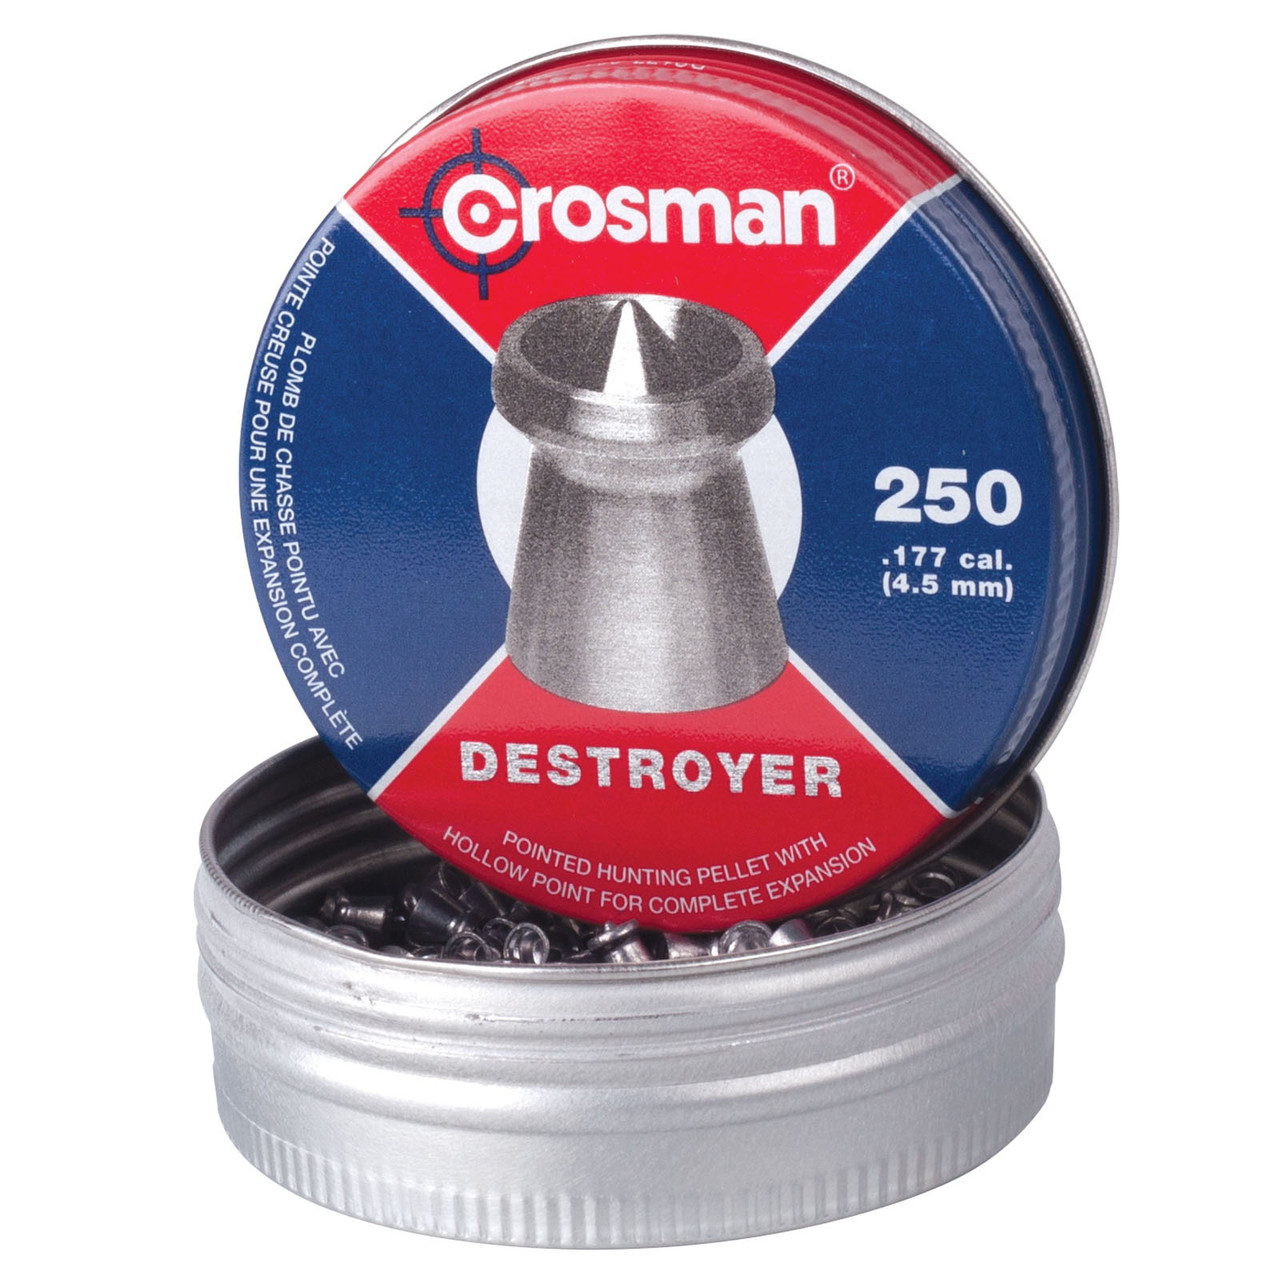 Crossman destroyer .22 5.5mm x175 airifle pellets 